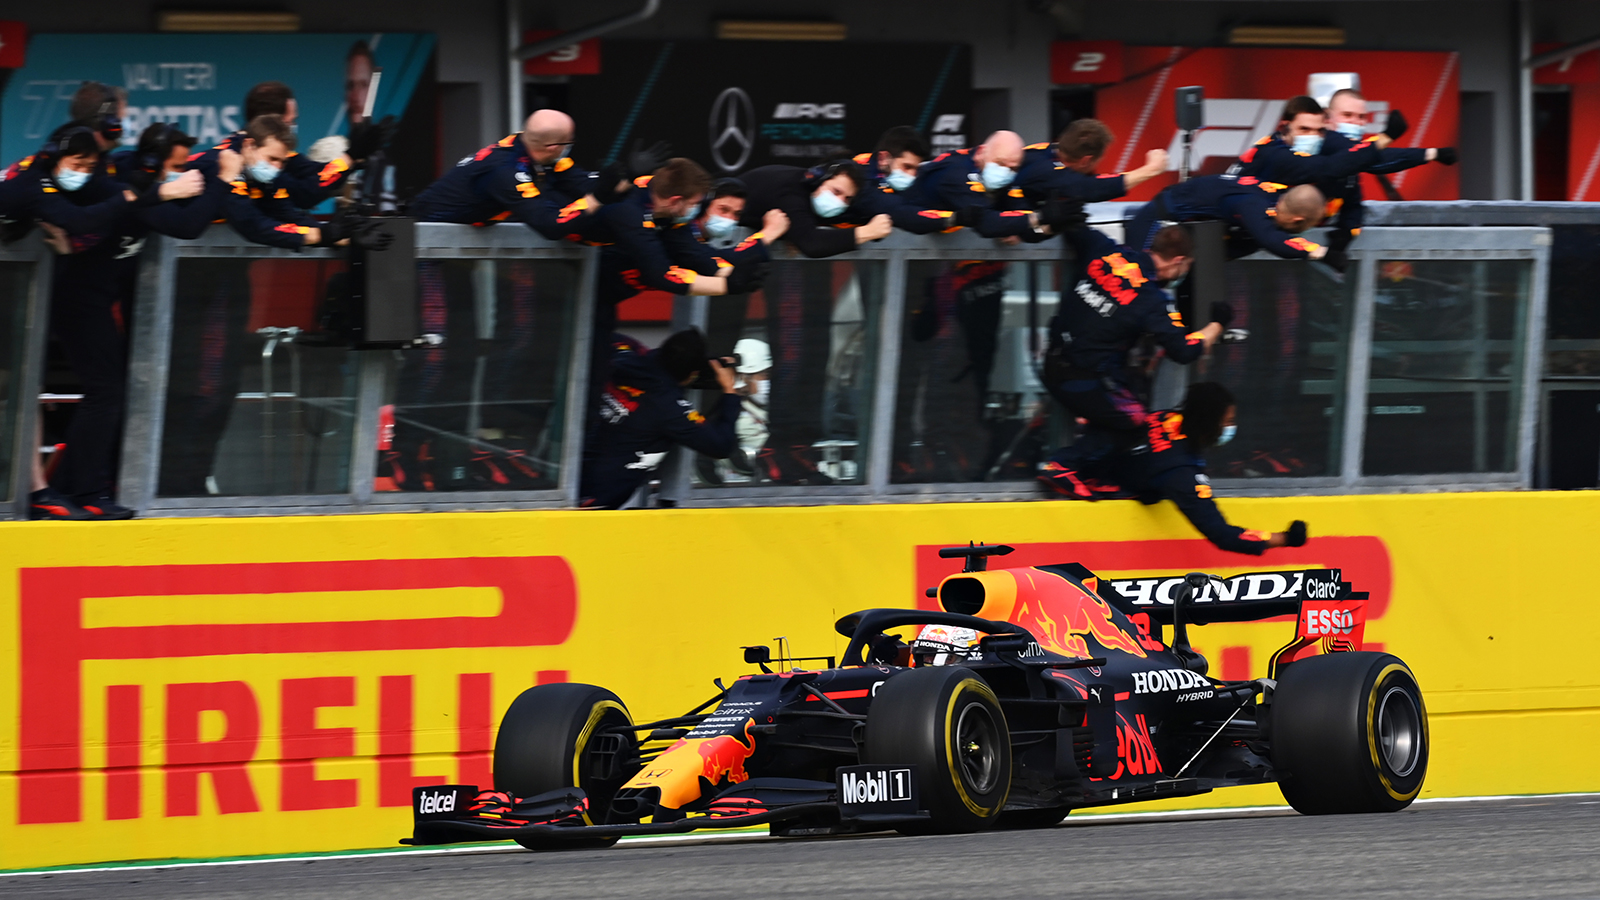 F1 : Max Verstappen wins Chaotic Italian GP at Imola